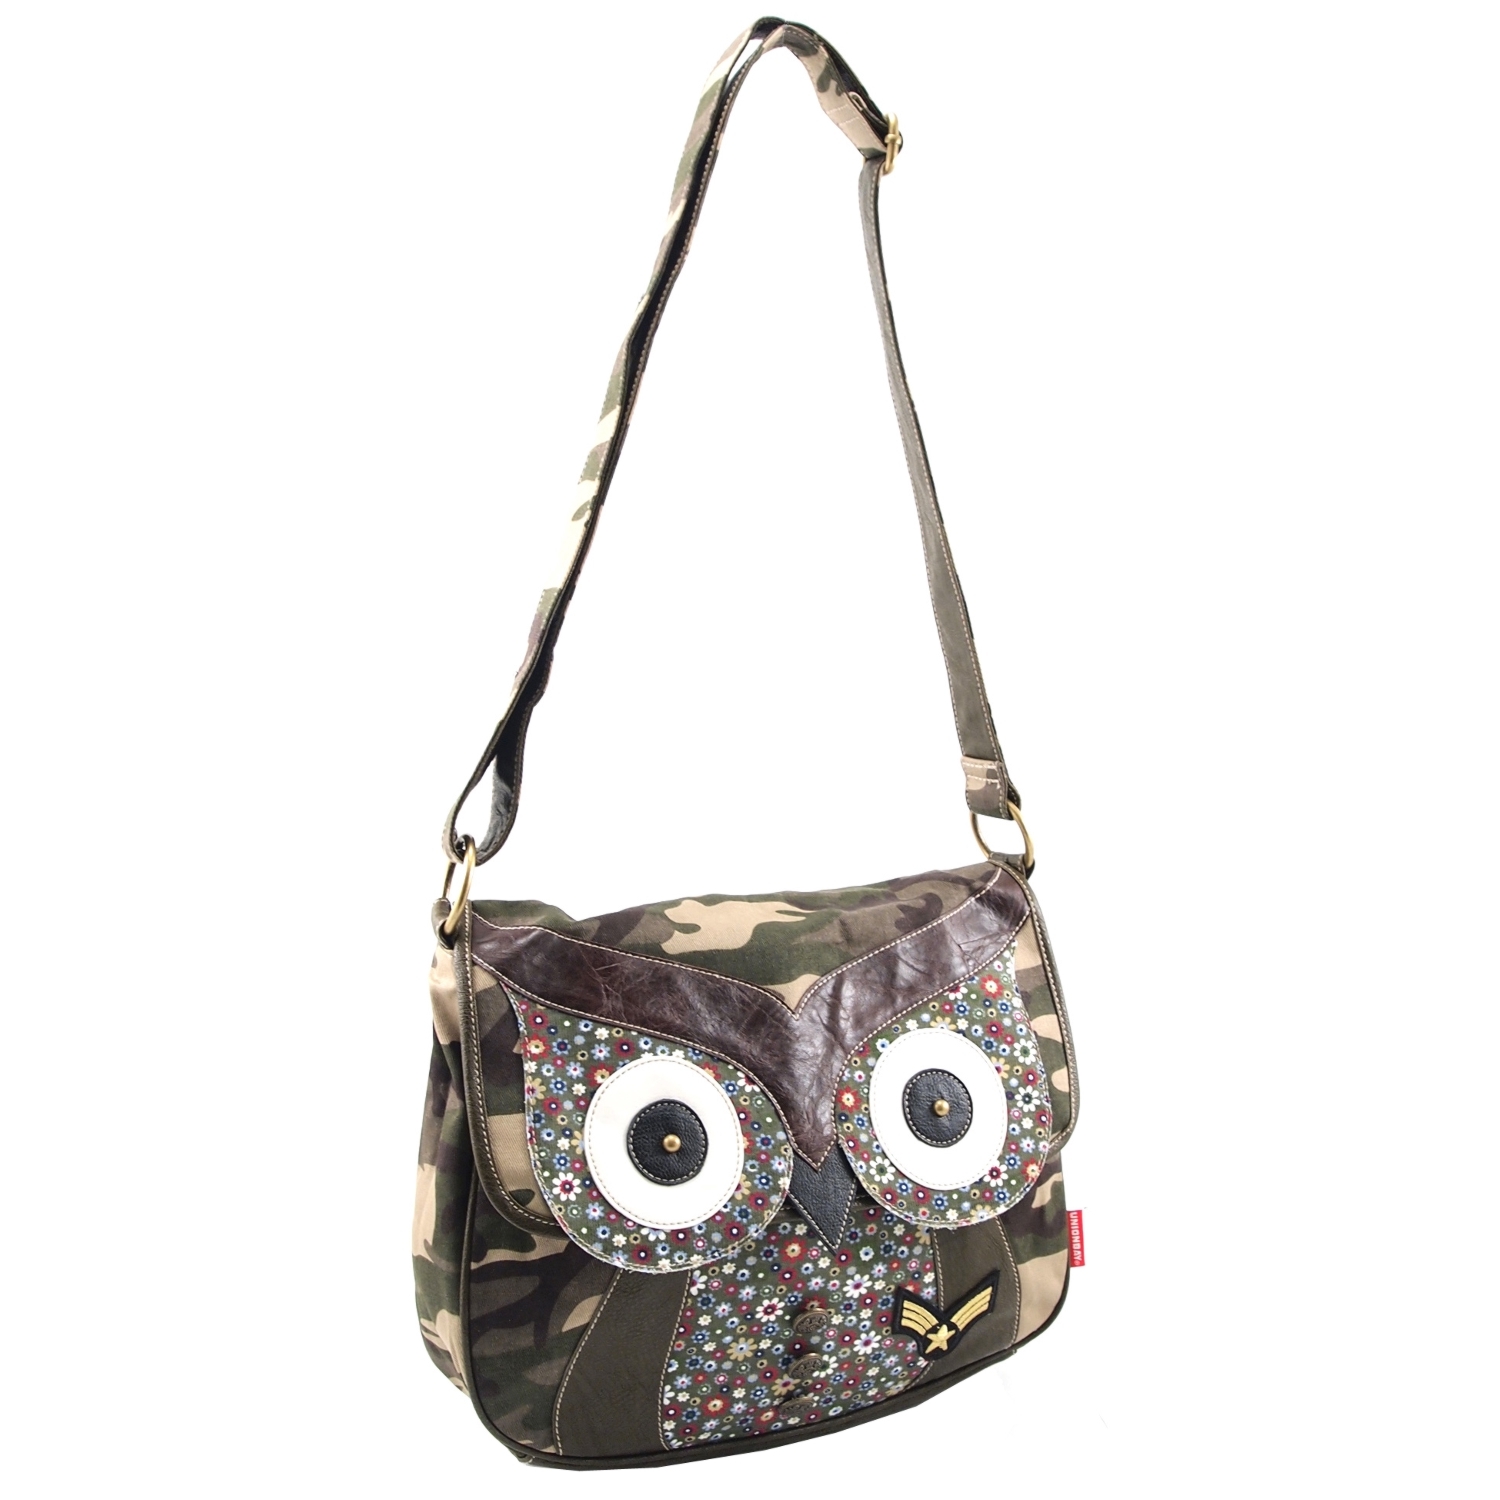 Unionbay Women's Messenger Bag - Owl